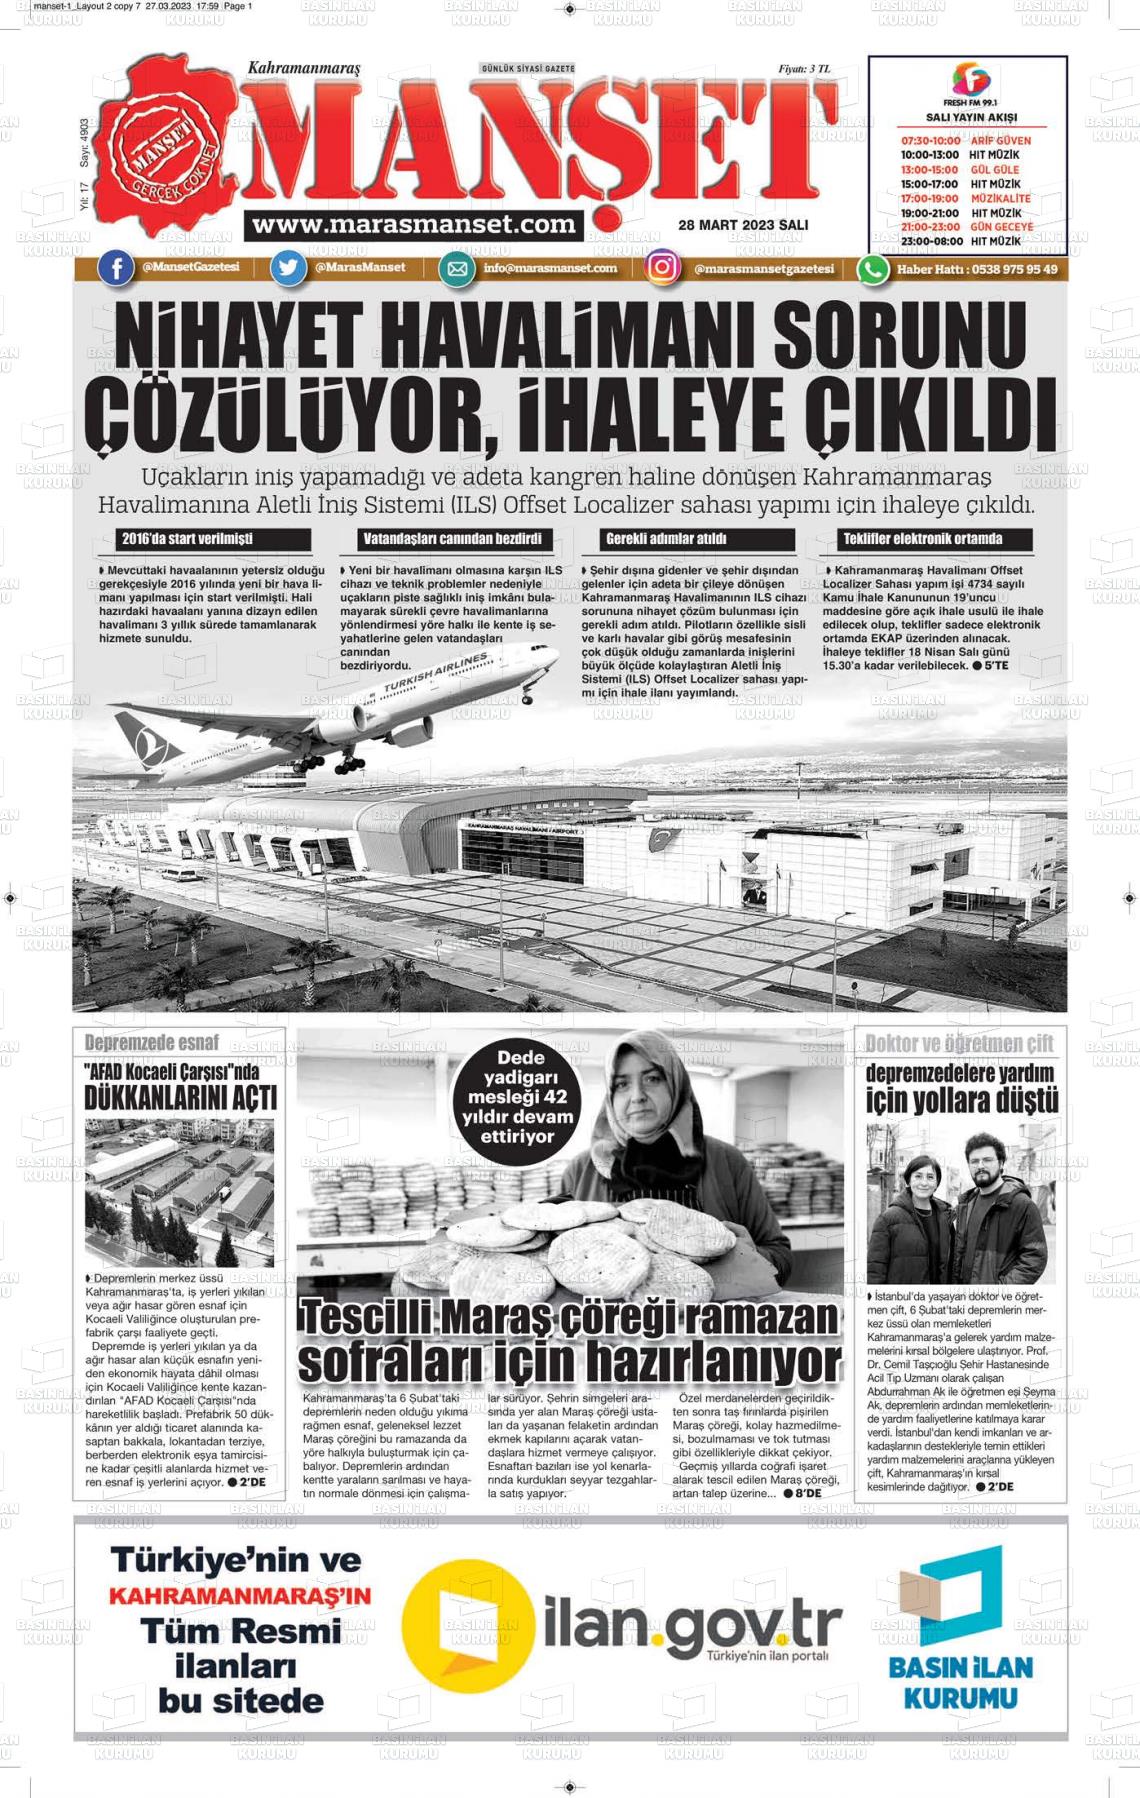 28 Mart 2023 Manşet Gazete Manşeti